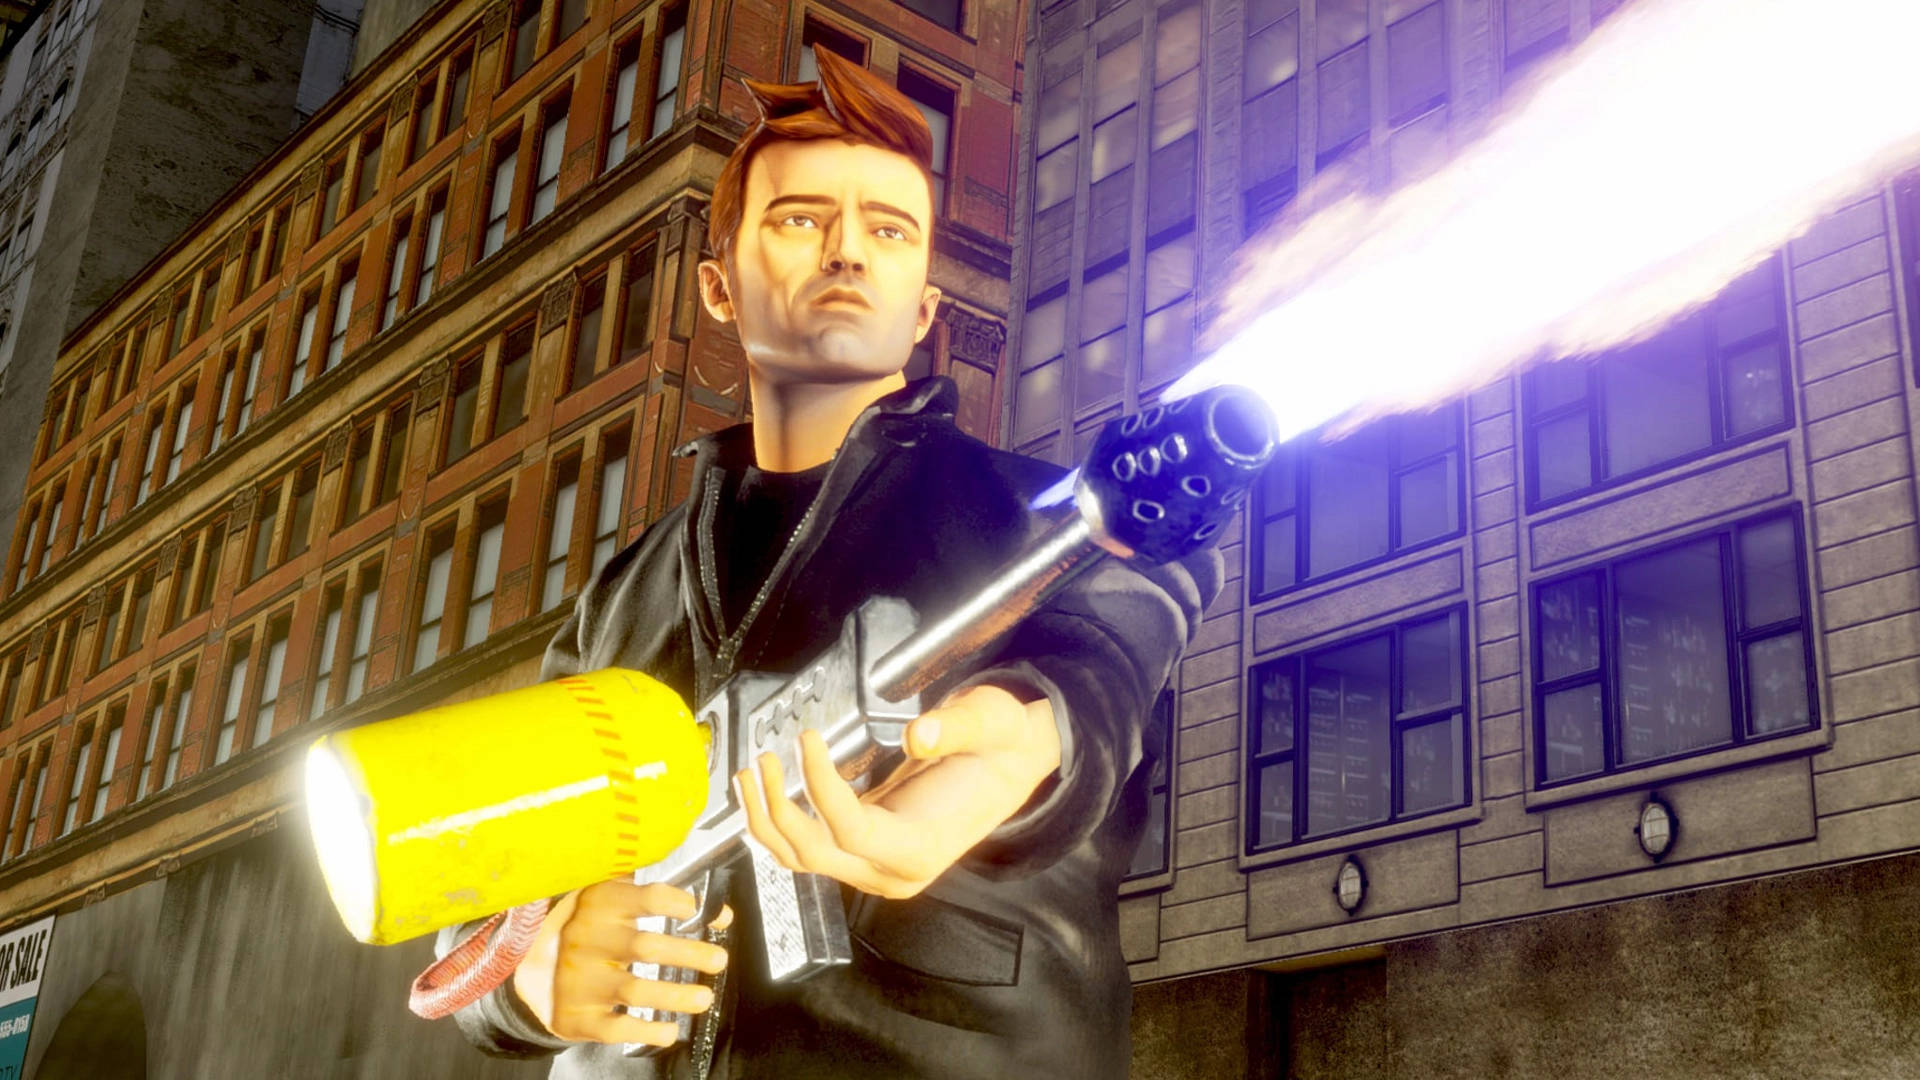 GTA Vice City Cheats for PC: Definitive Edition Cheat Codes